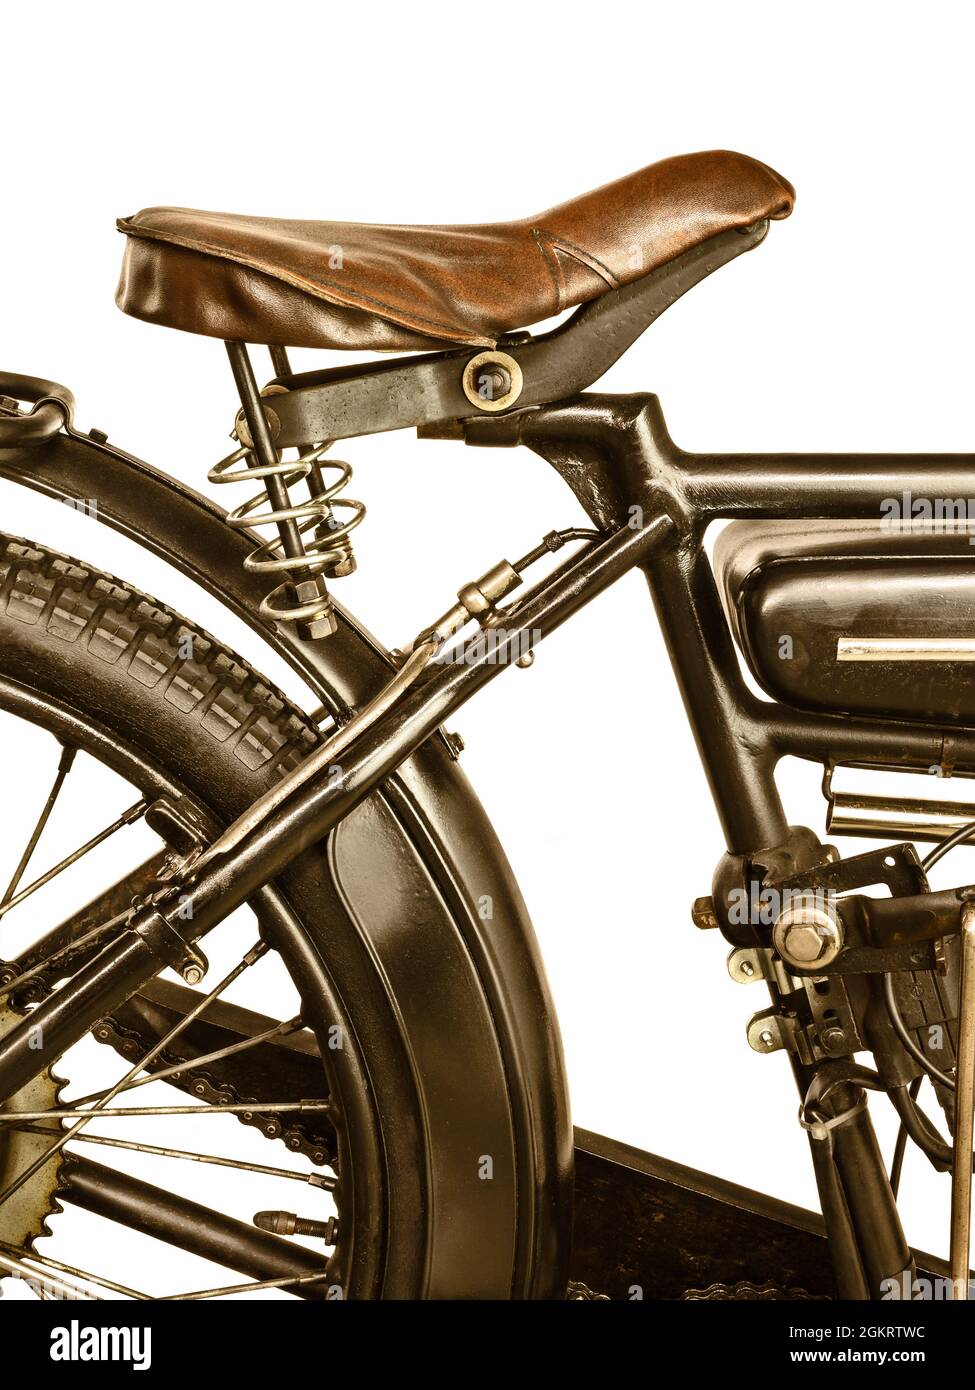 Retro styled image of a motorcycle saddle isolated on a white background Stock Photo